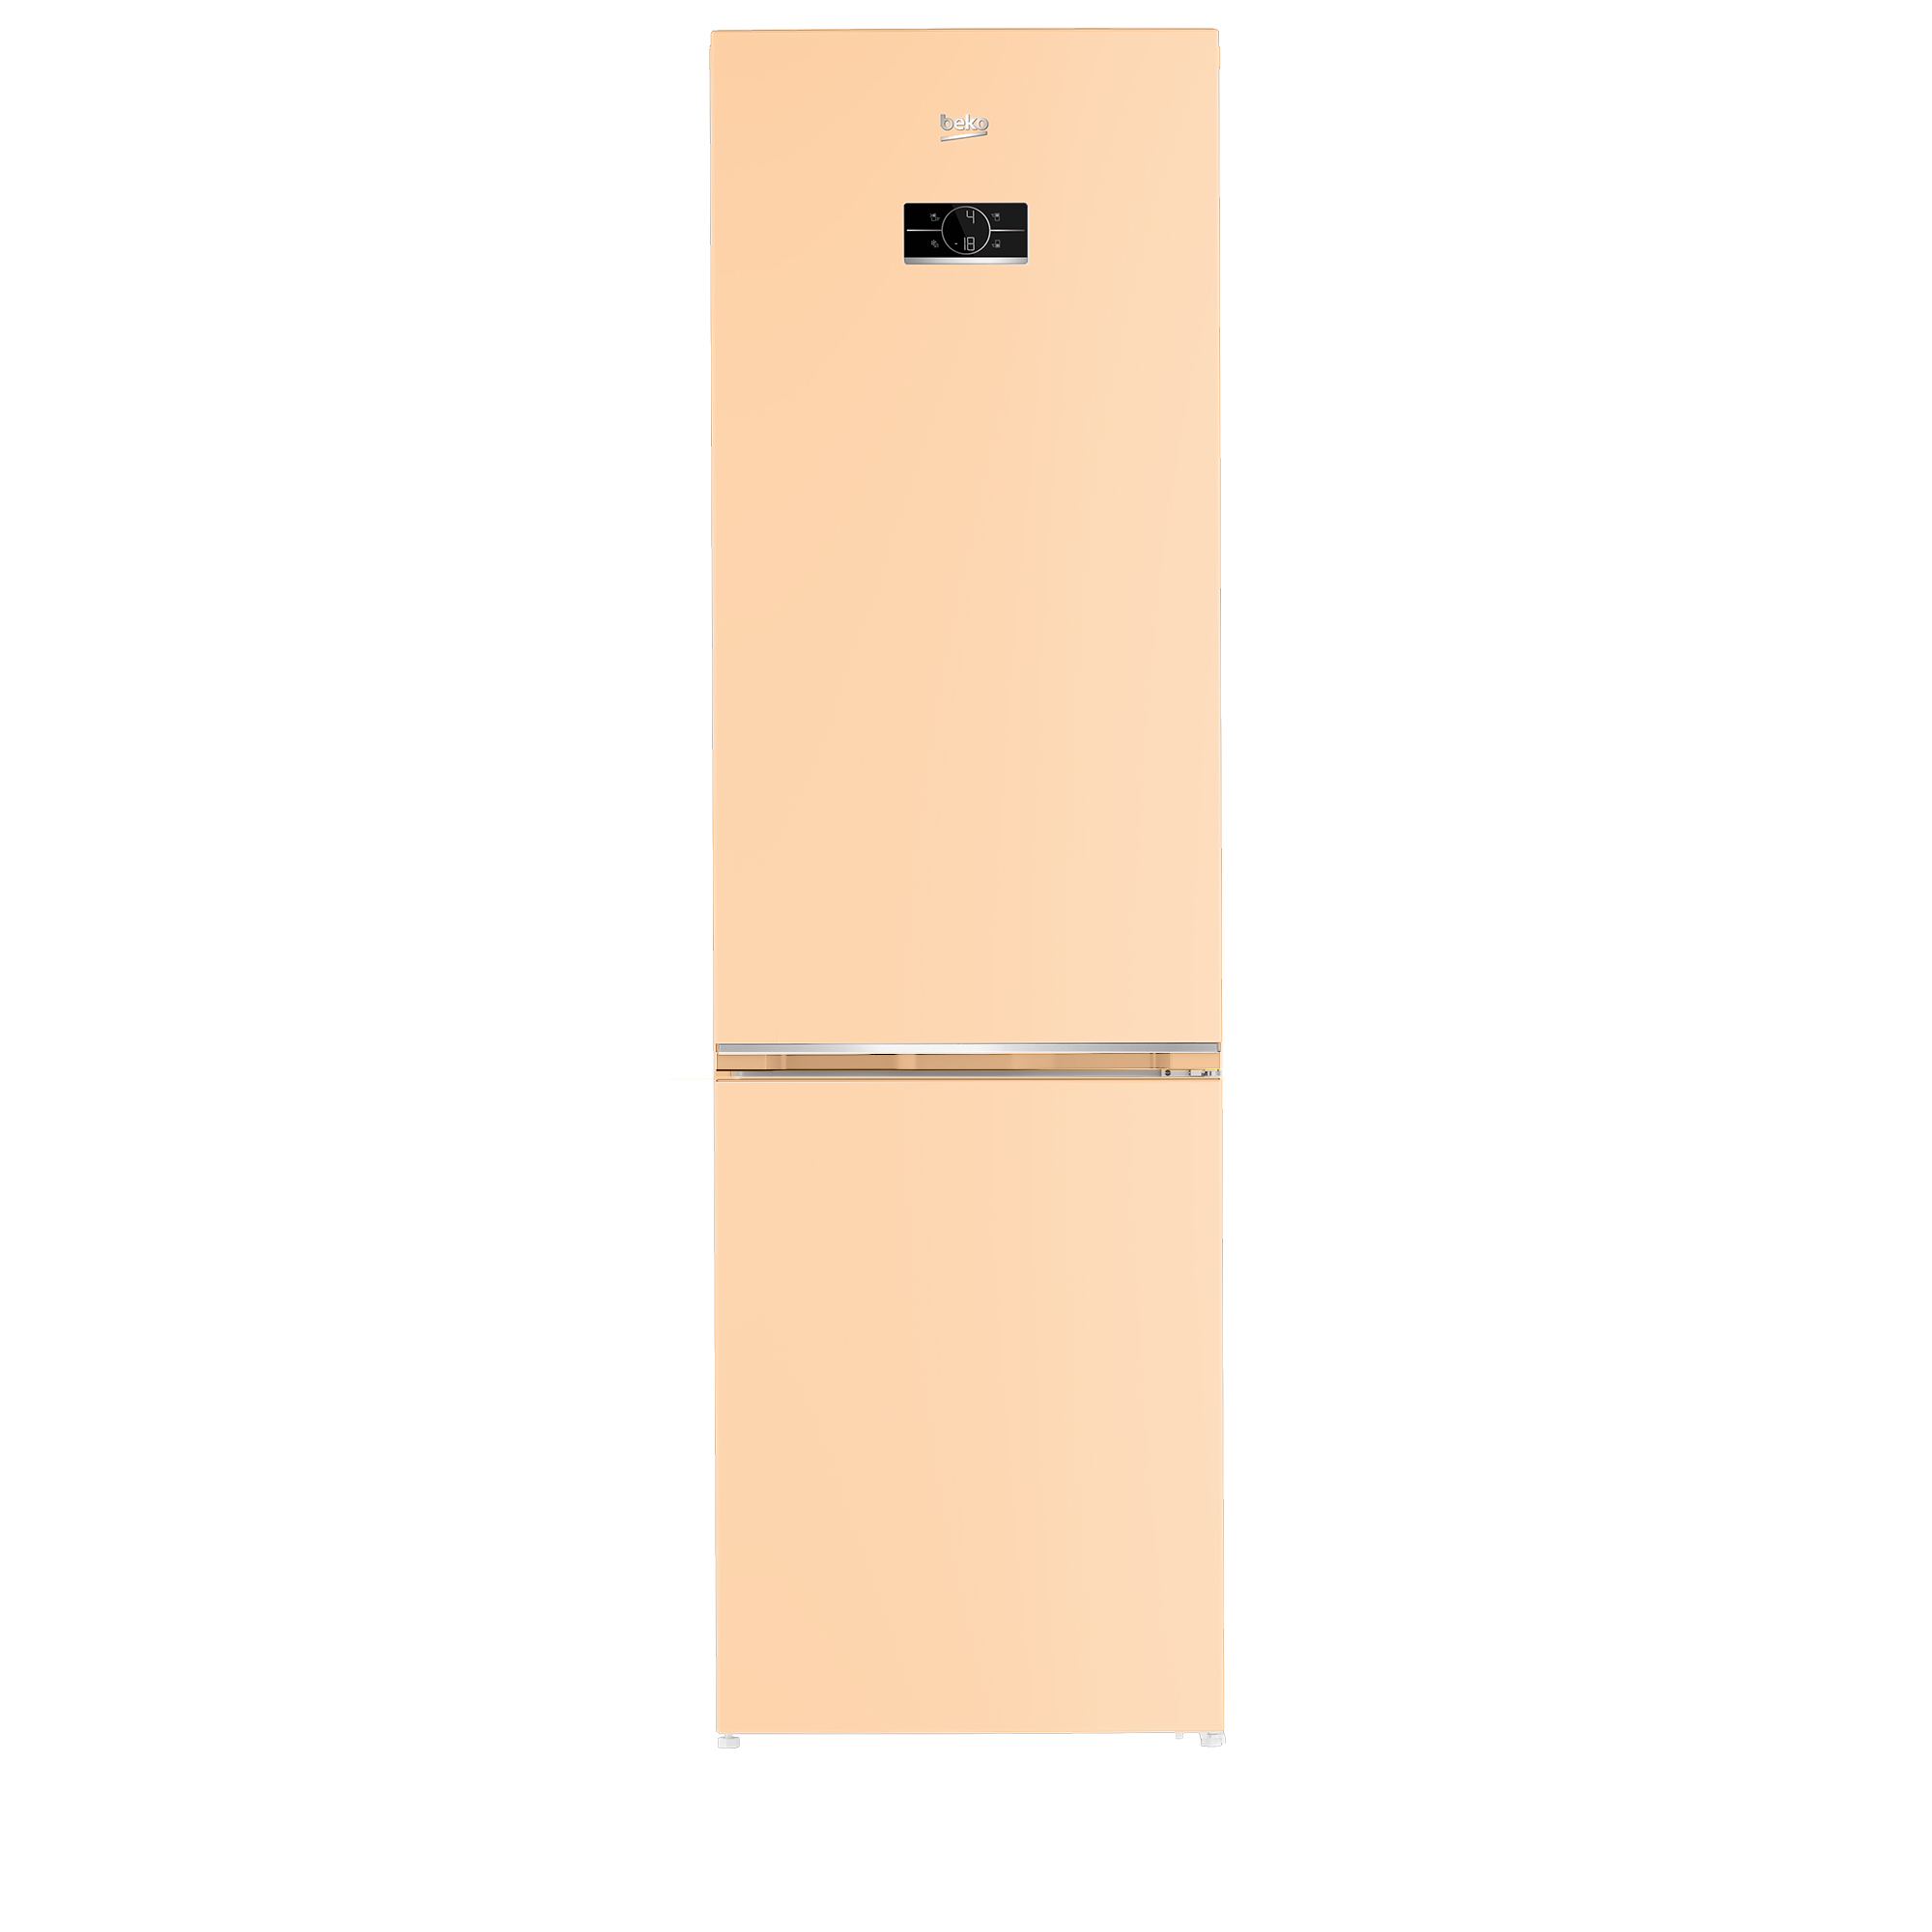 Узкие холодильники до 55 см. Холодильник LG 509 cetl. Холодильник Jacky's Jr fv1860. Bosch kgn36nk21r. Холодильник Jacky's Jr fs227ms.